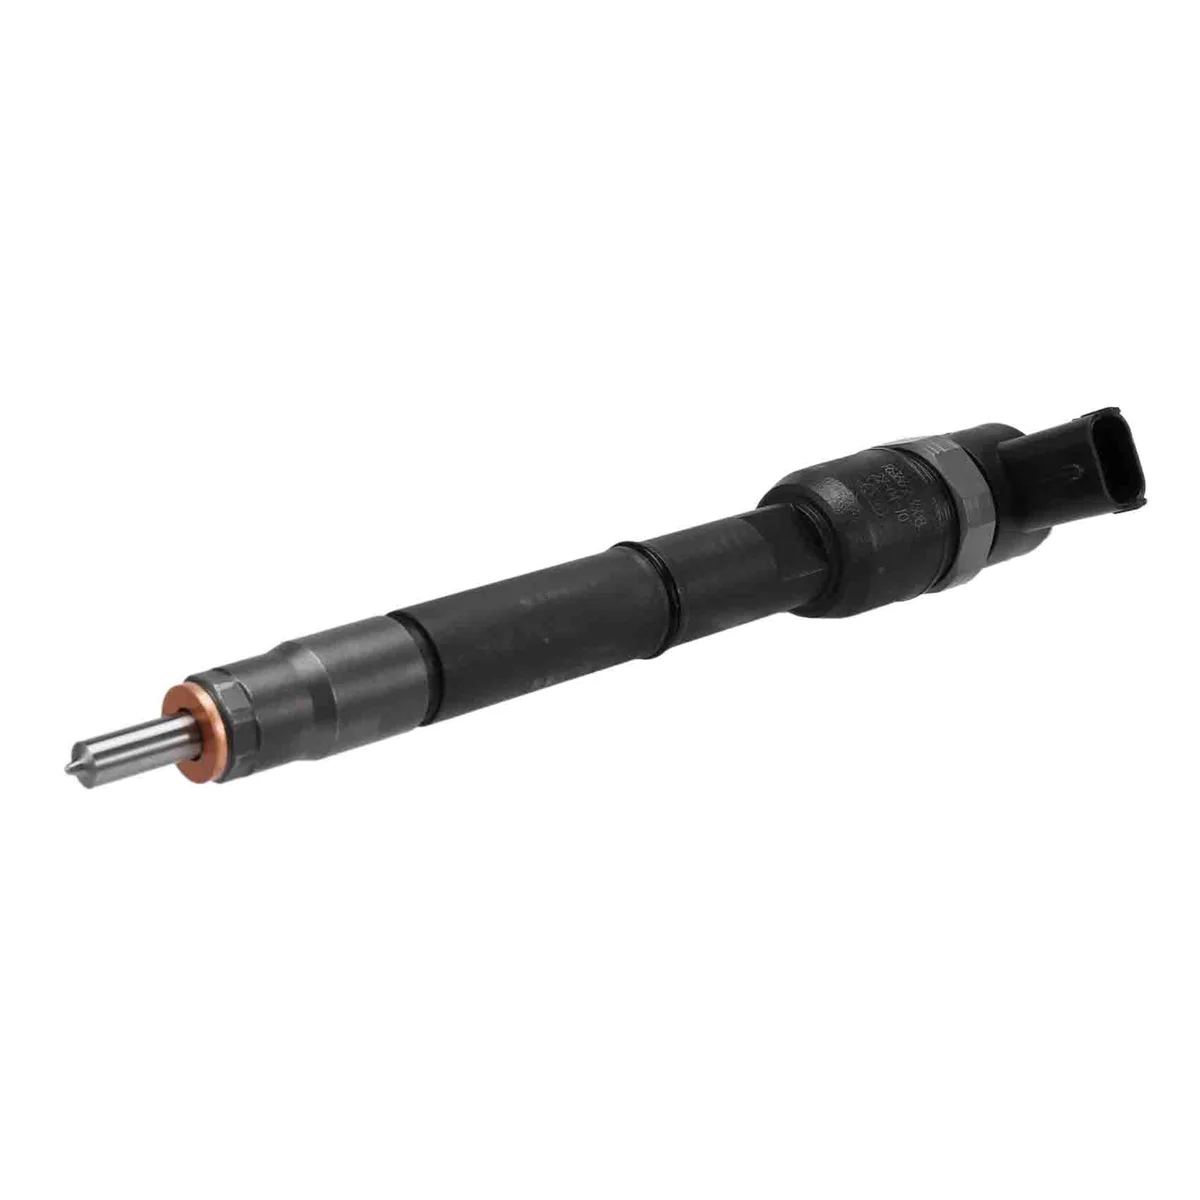 

1Pcs CRDI Diesel Fuel Injector 33800-2A900 0445110320 for Accent Elantra Forte Soul Elantra Common Rail Injector Nozzle